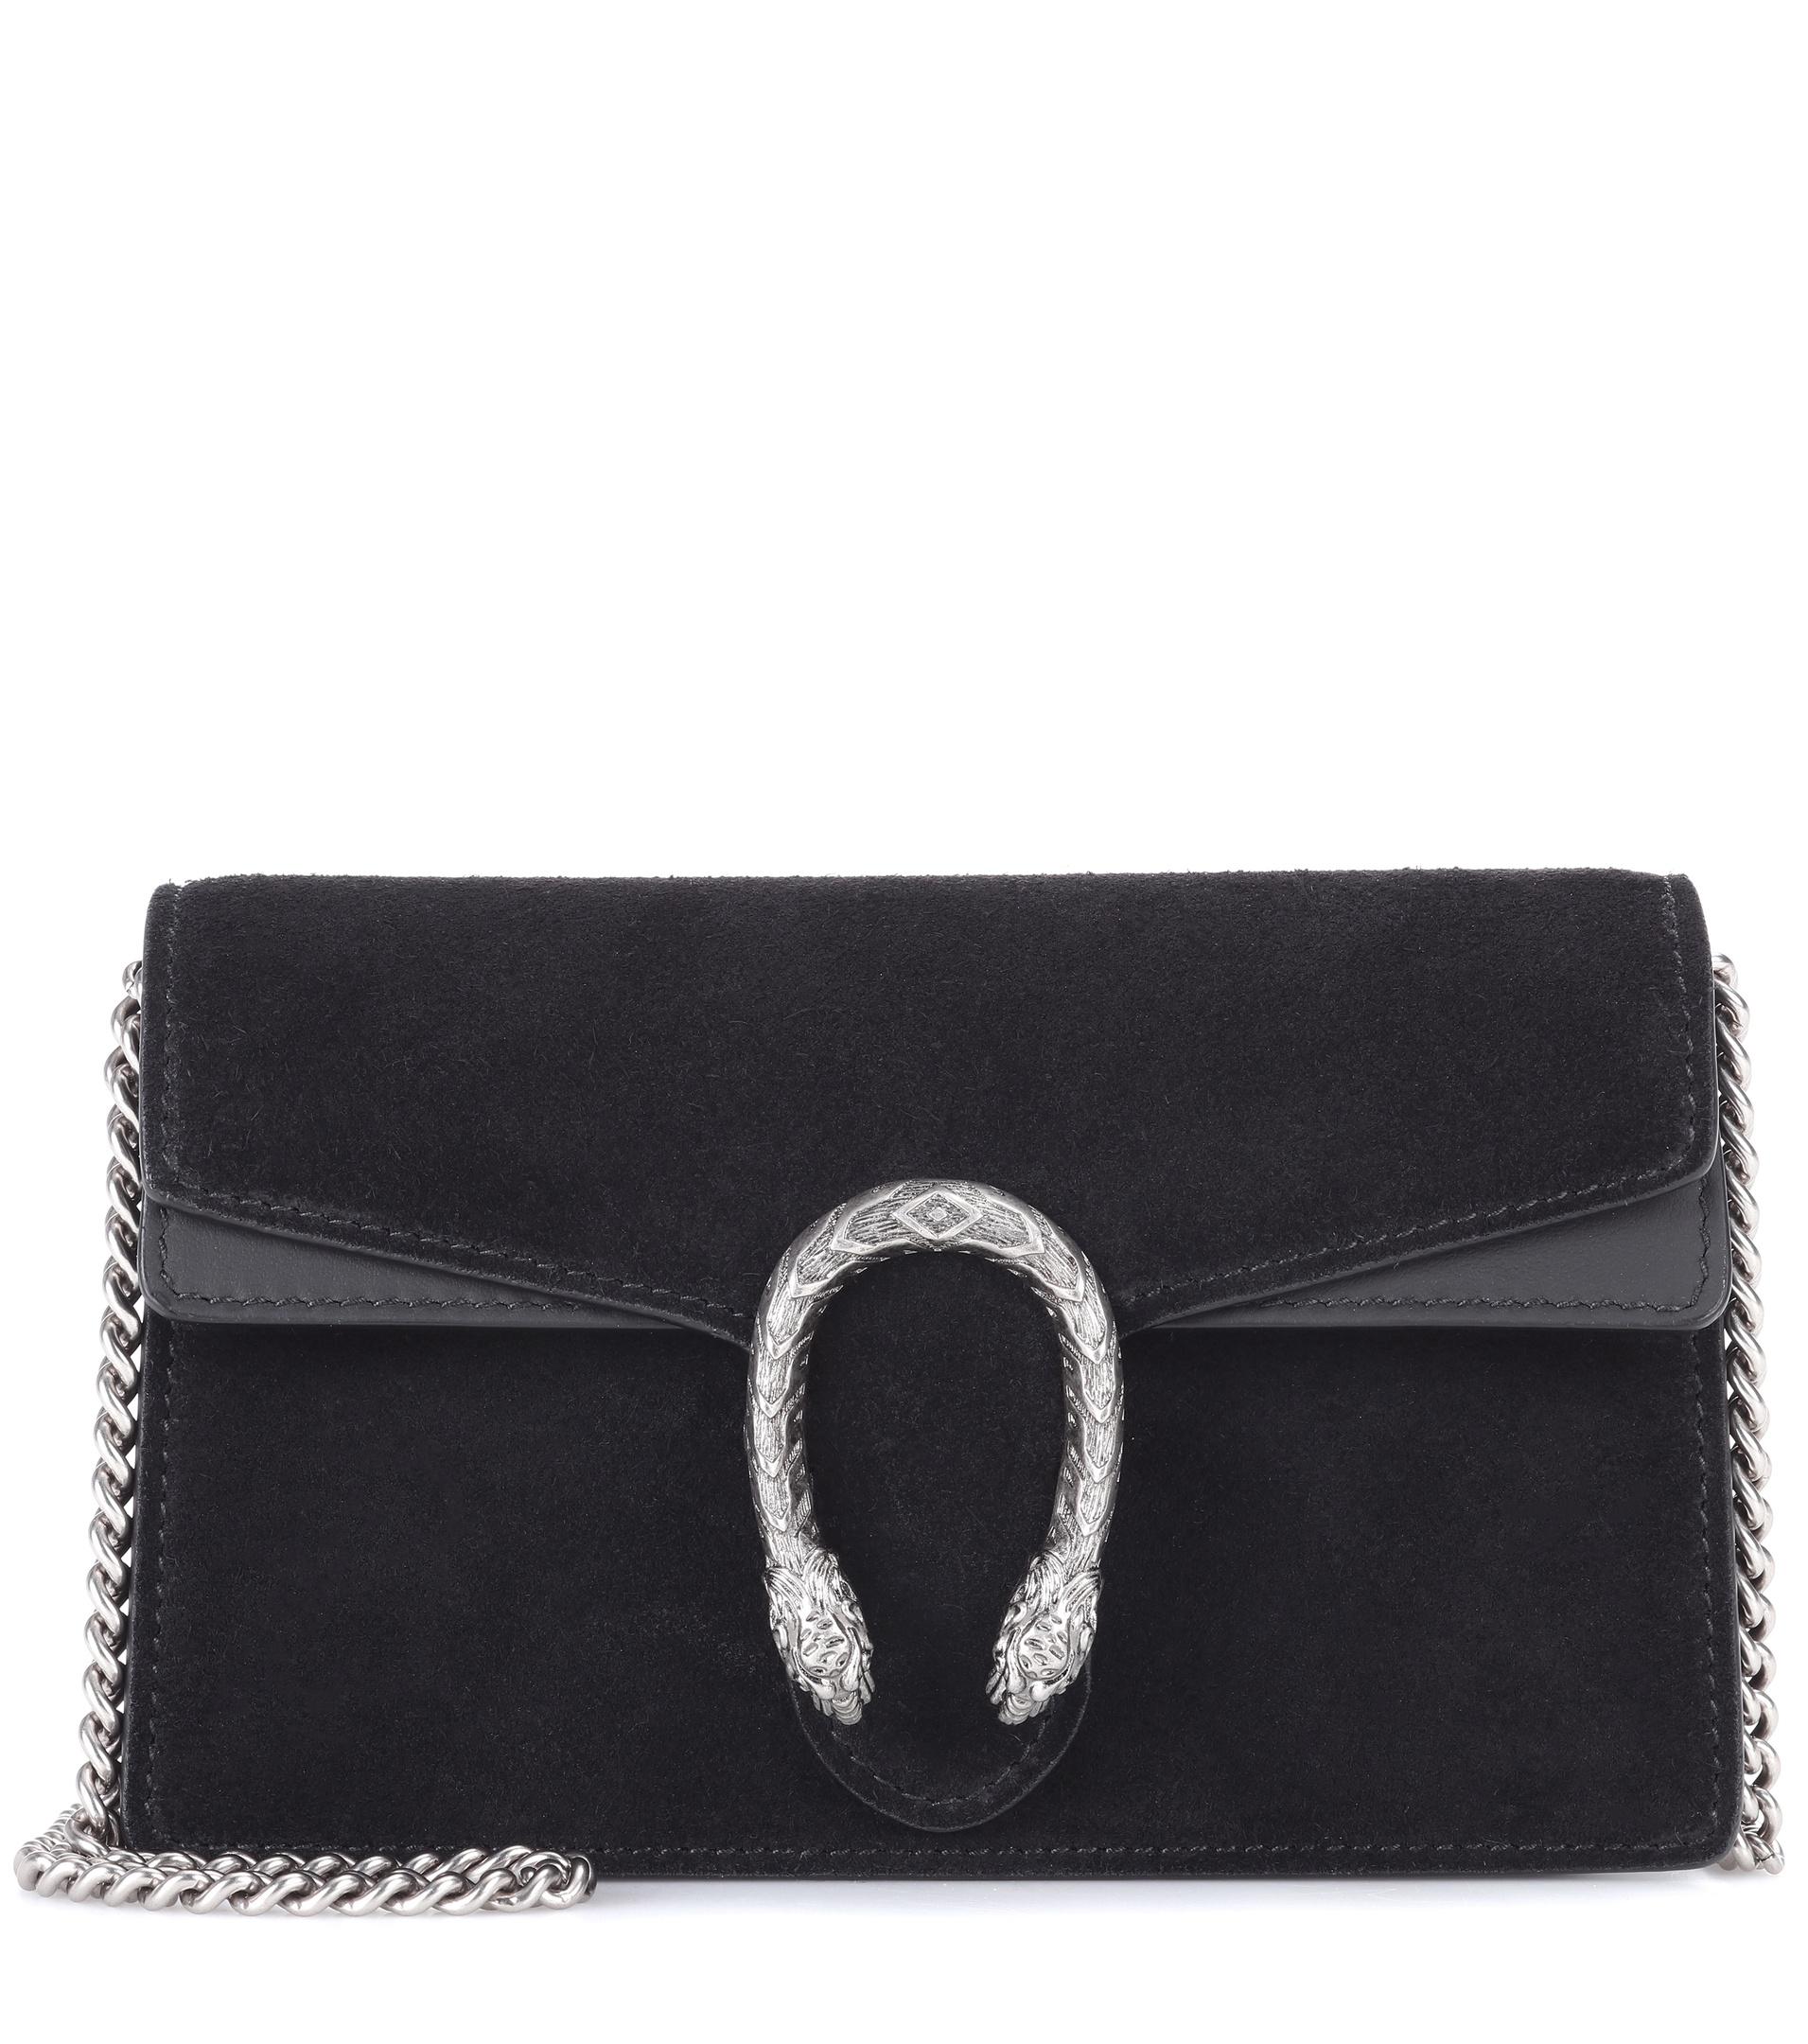 Lyst - Gucci Dionysus Super Mini Shoulder Bag in Black